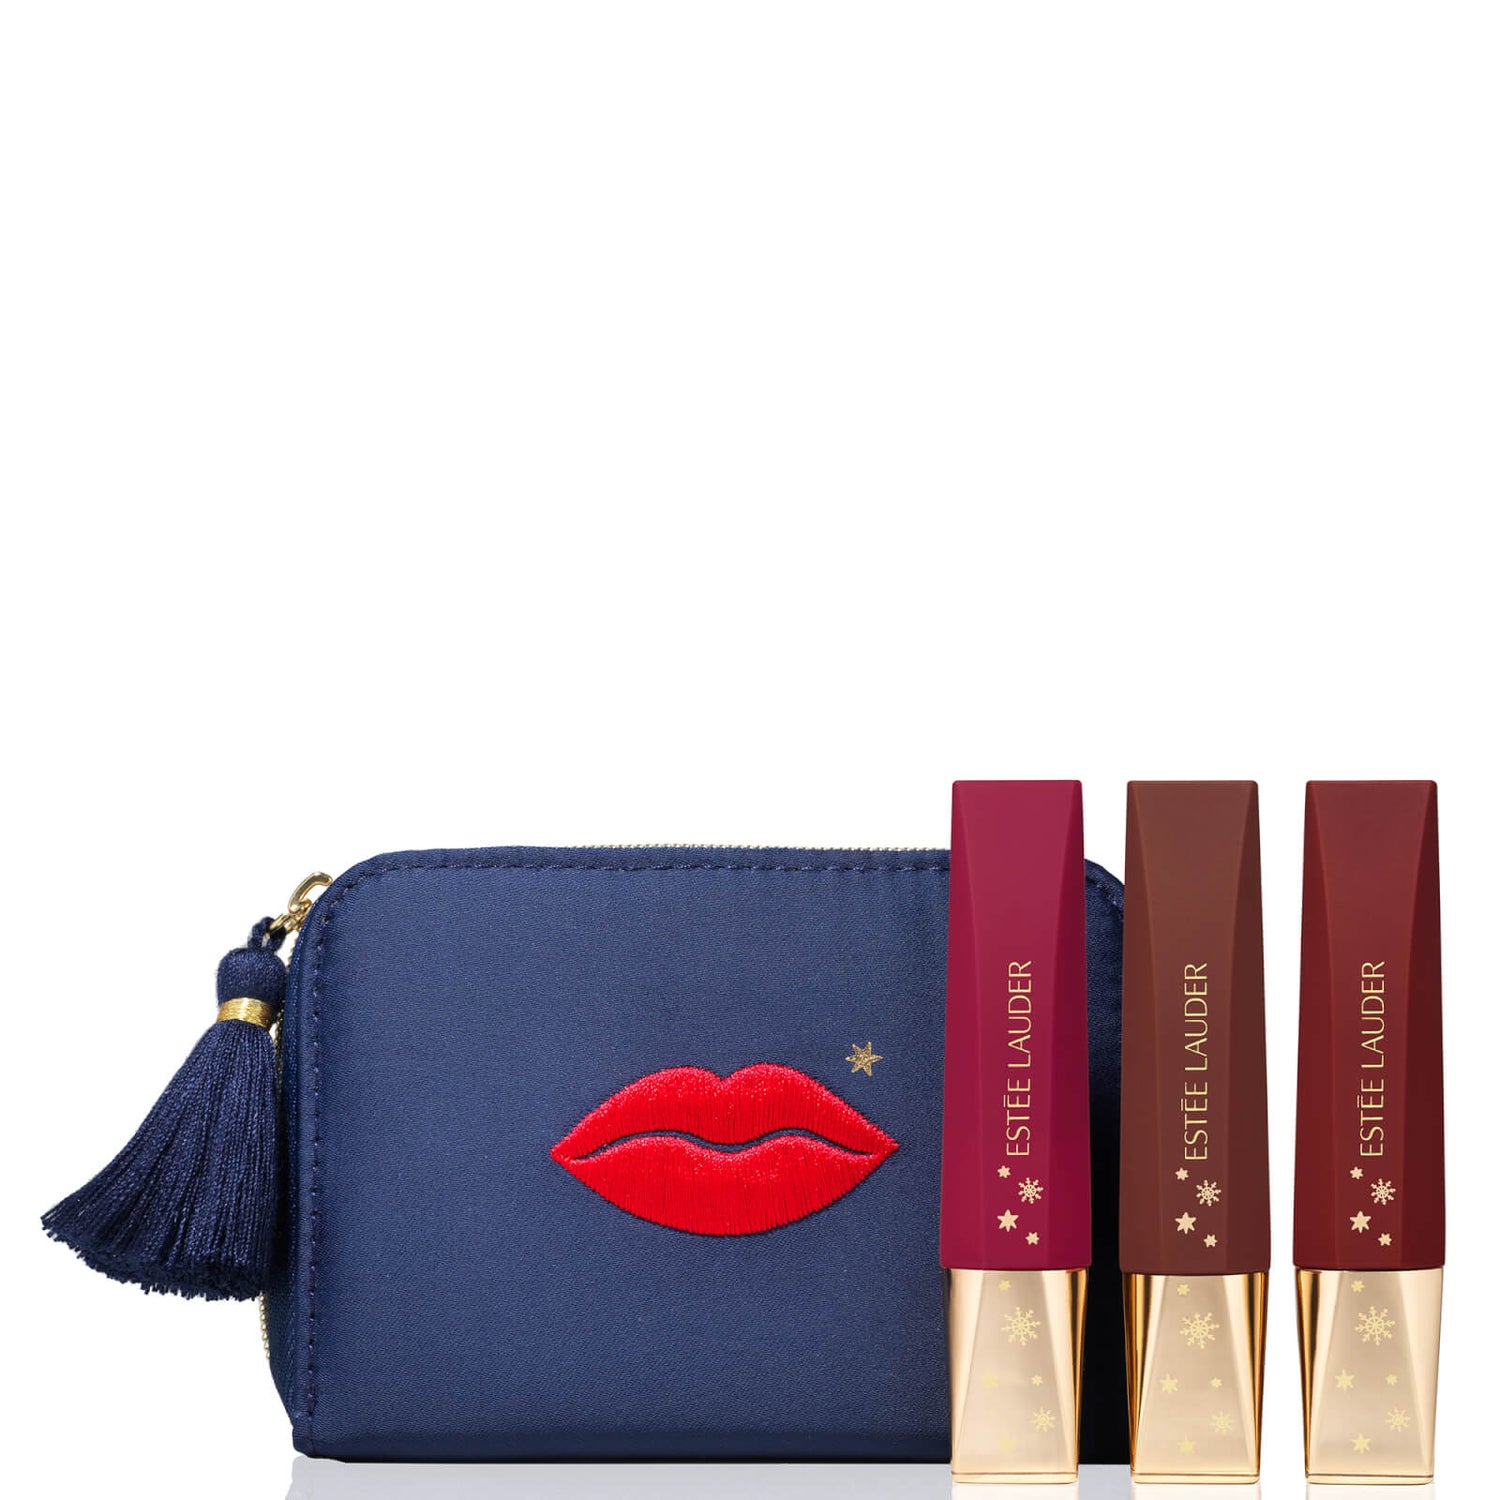 Estee Lauder Super Plush Lips Gift Set (Worth £78.00)